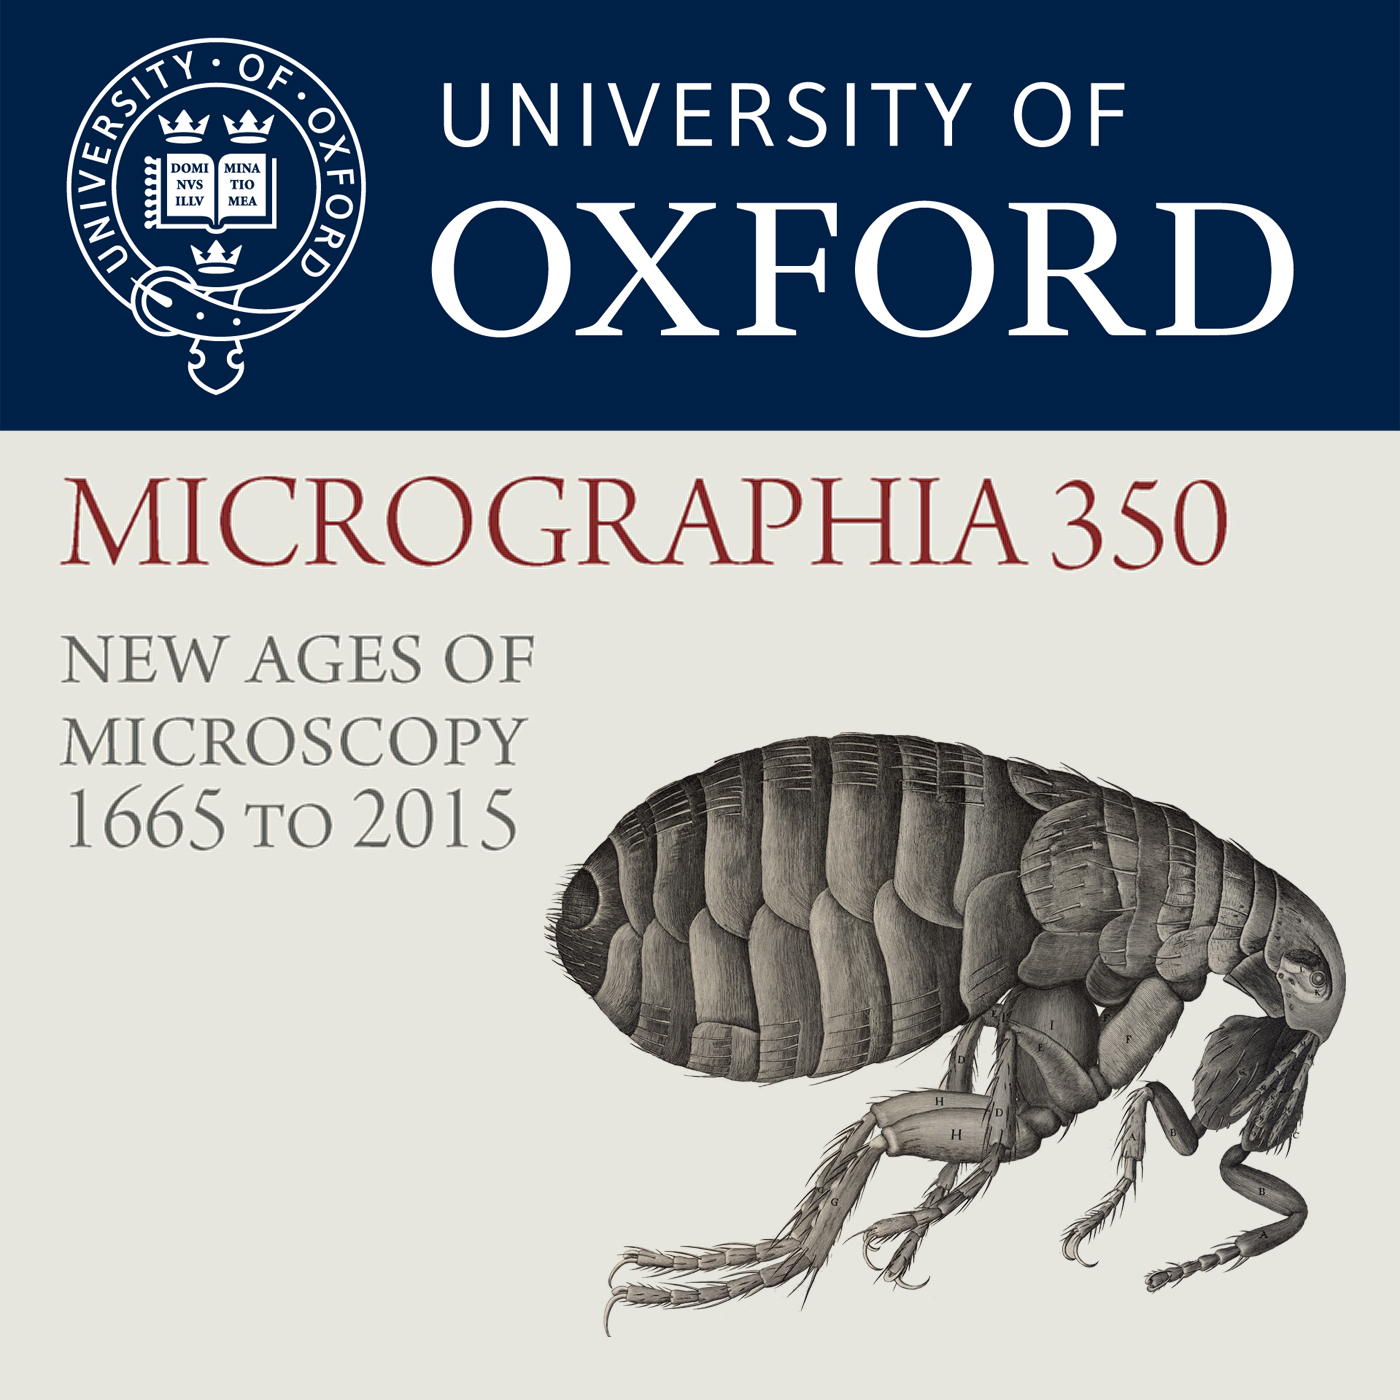 Micrographia 350